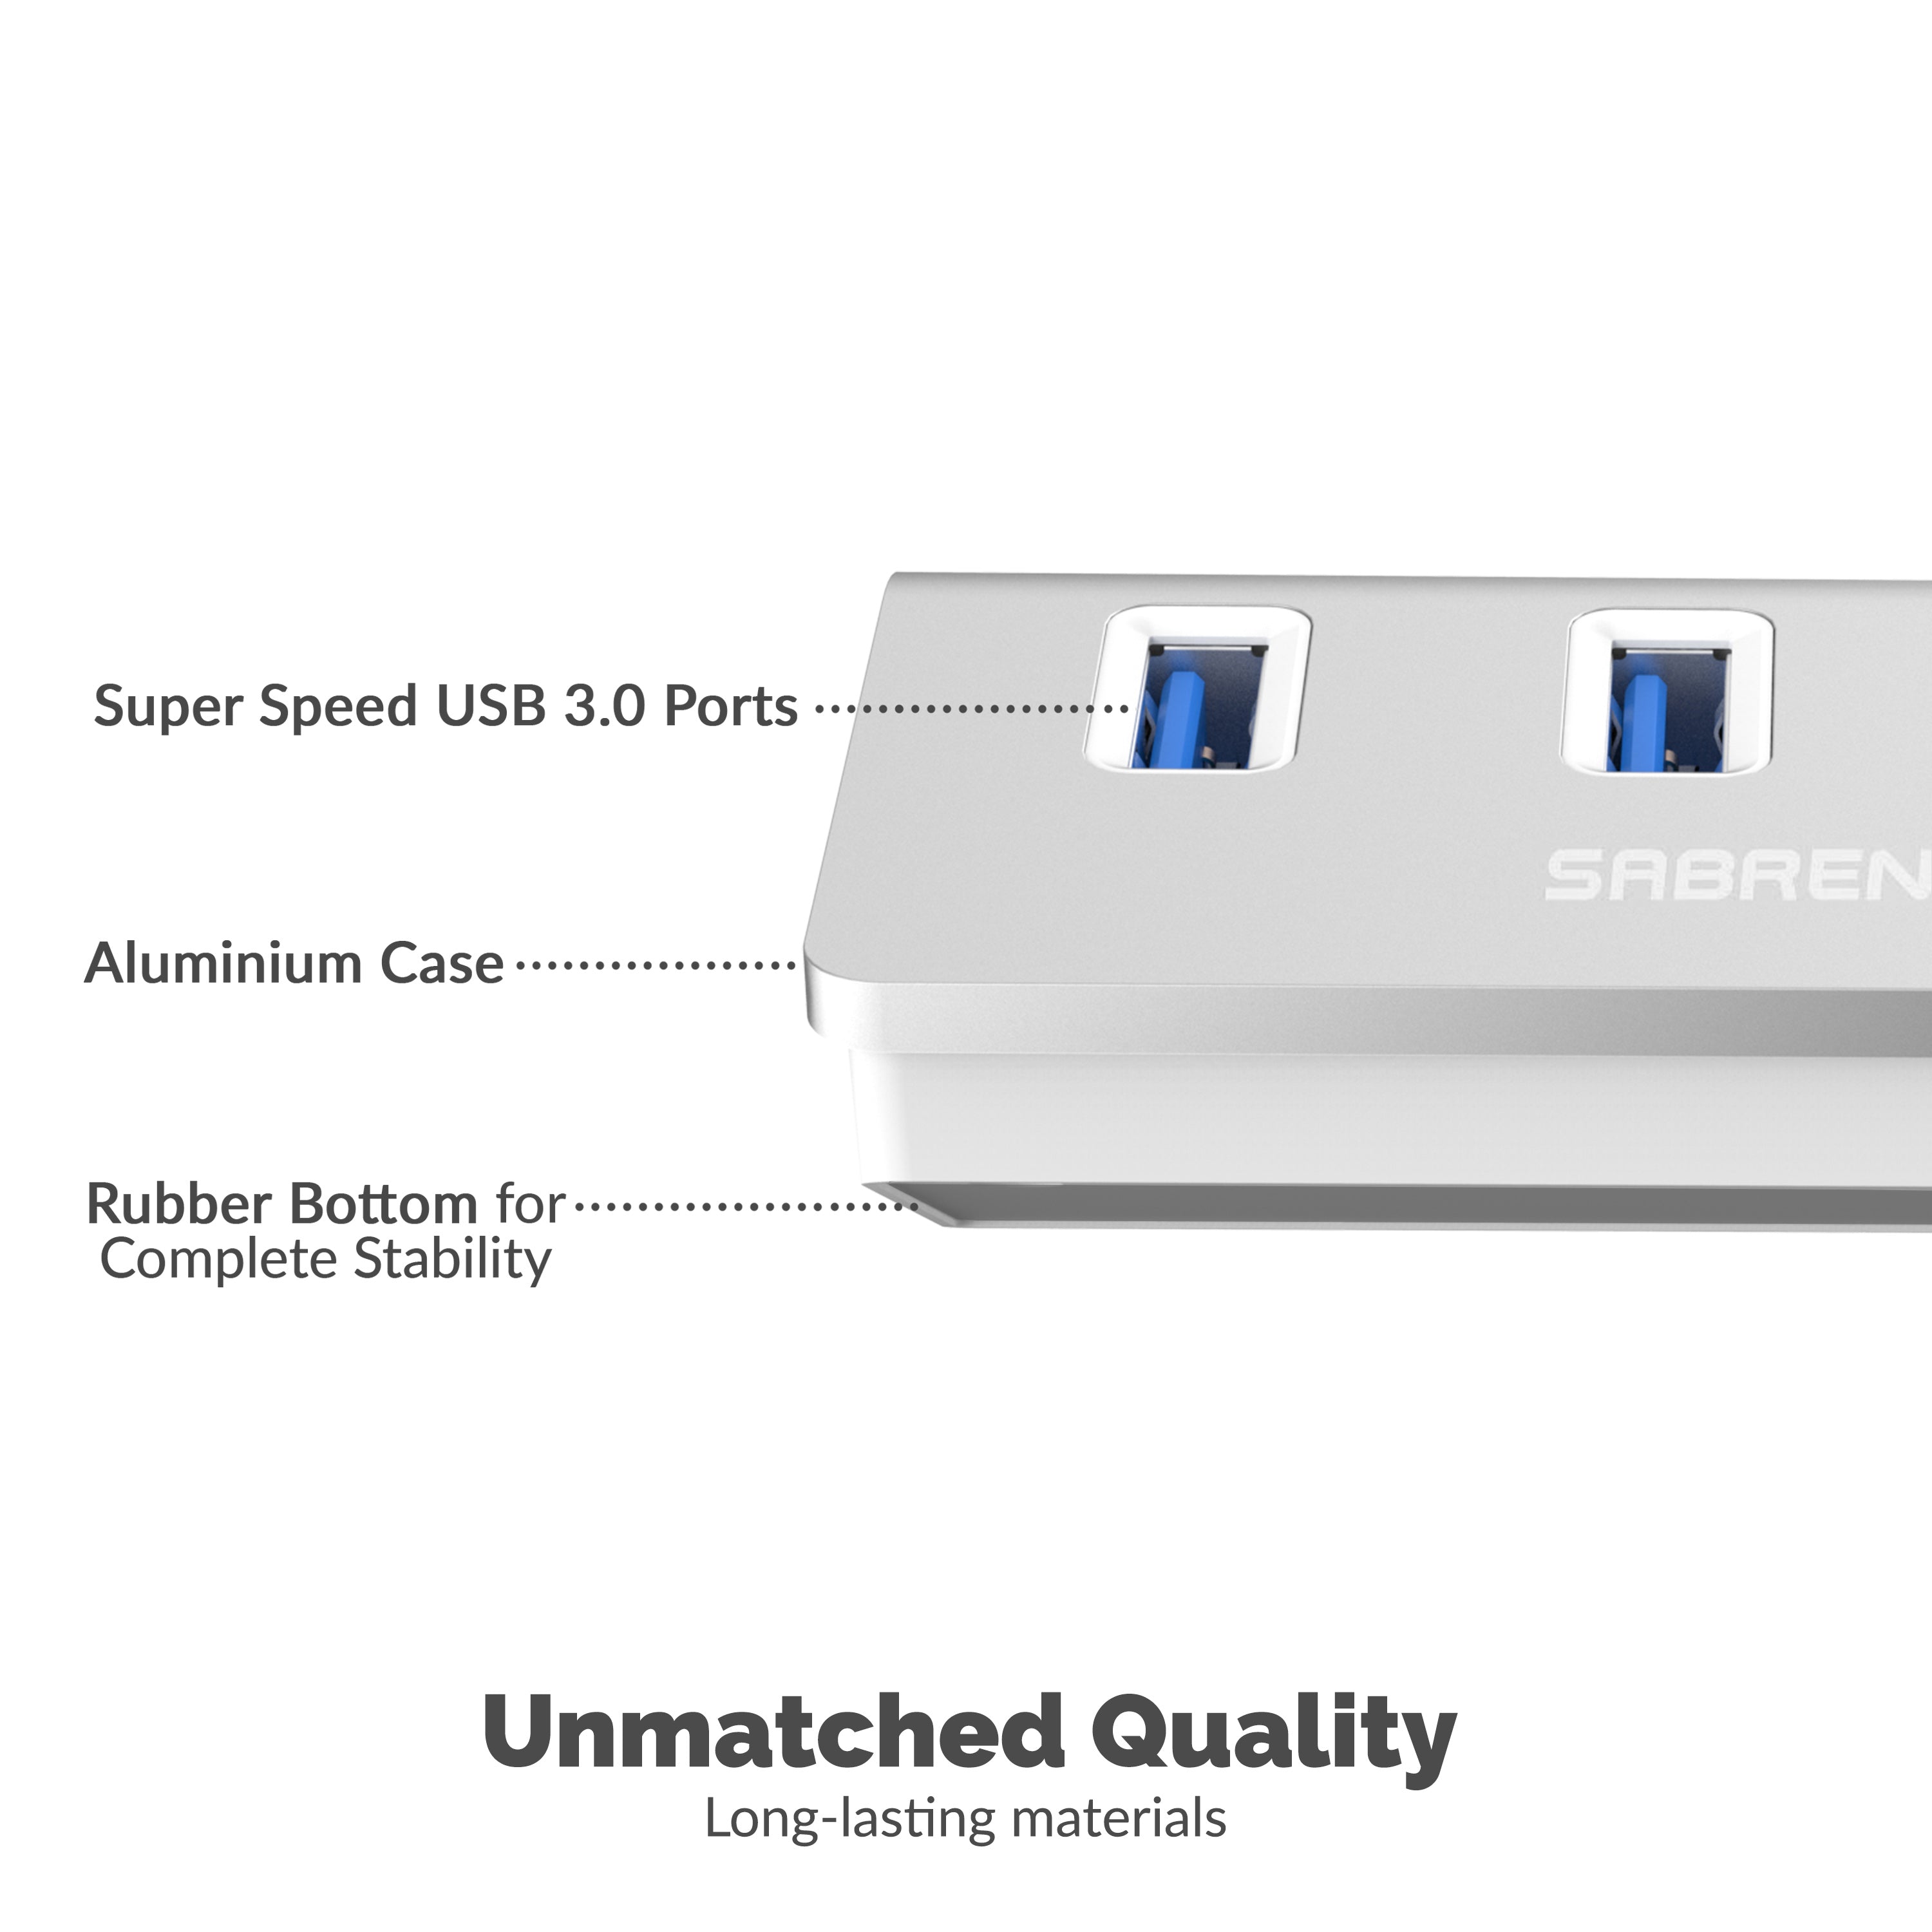 Sabrent USB 3.0 3-Port Hub and Multi-Card Reader HB-MACR B&H